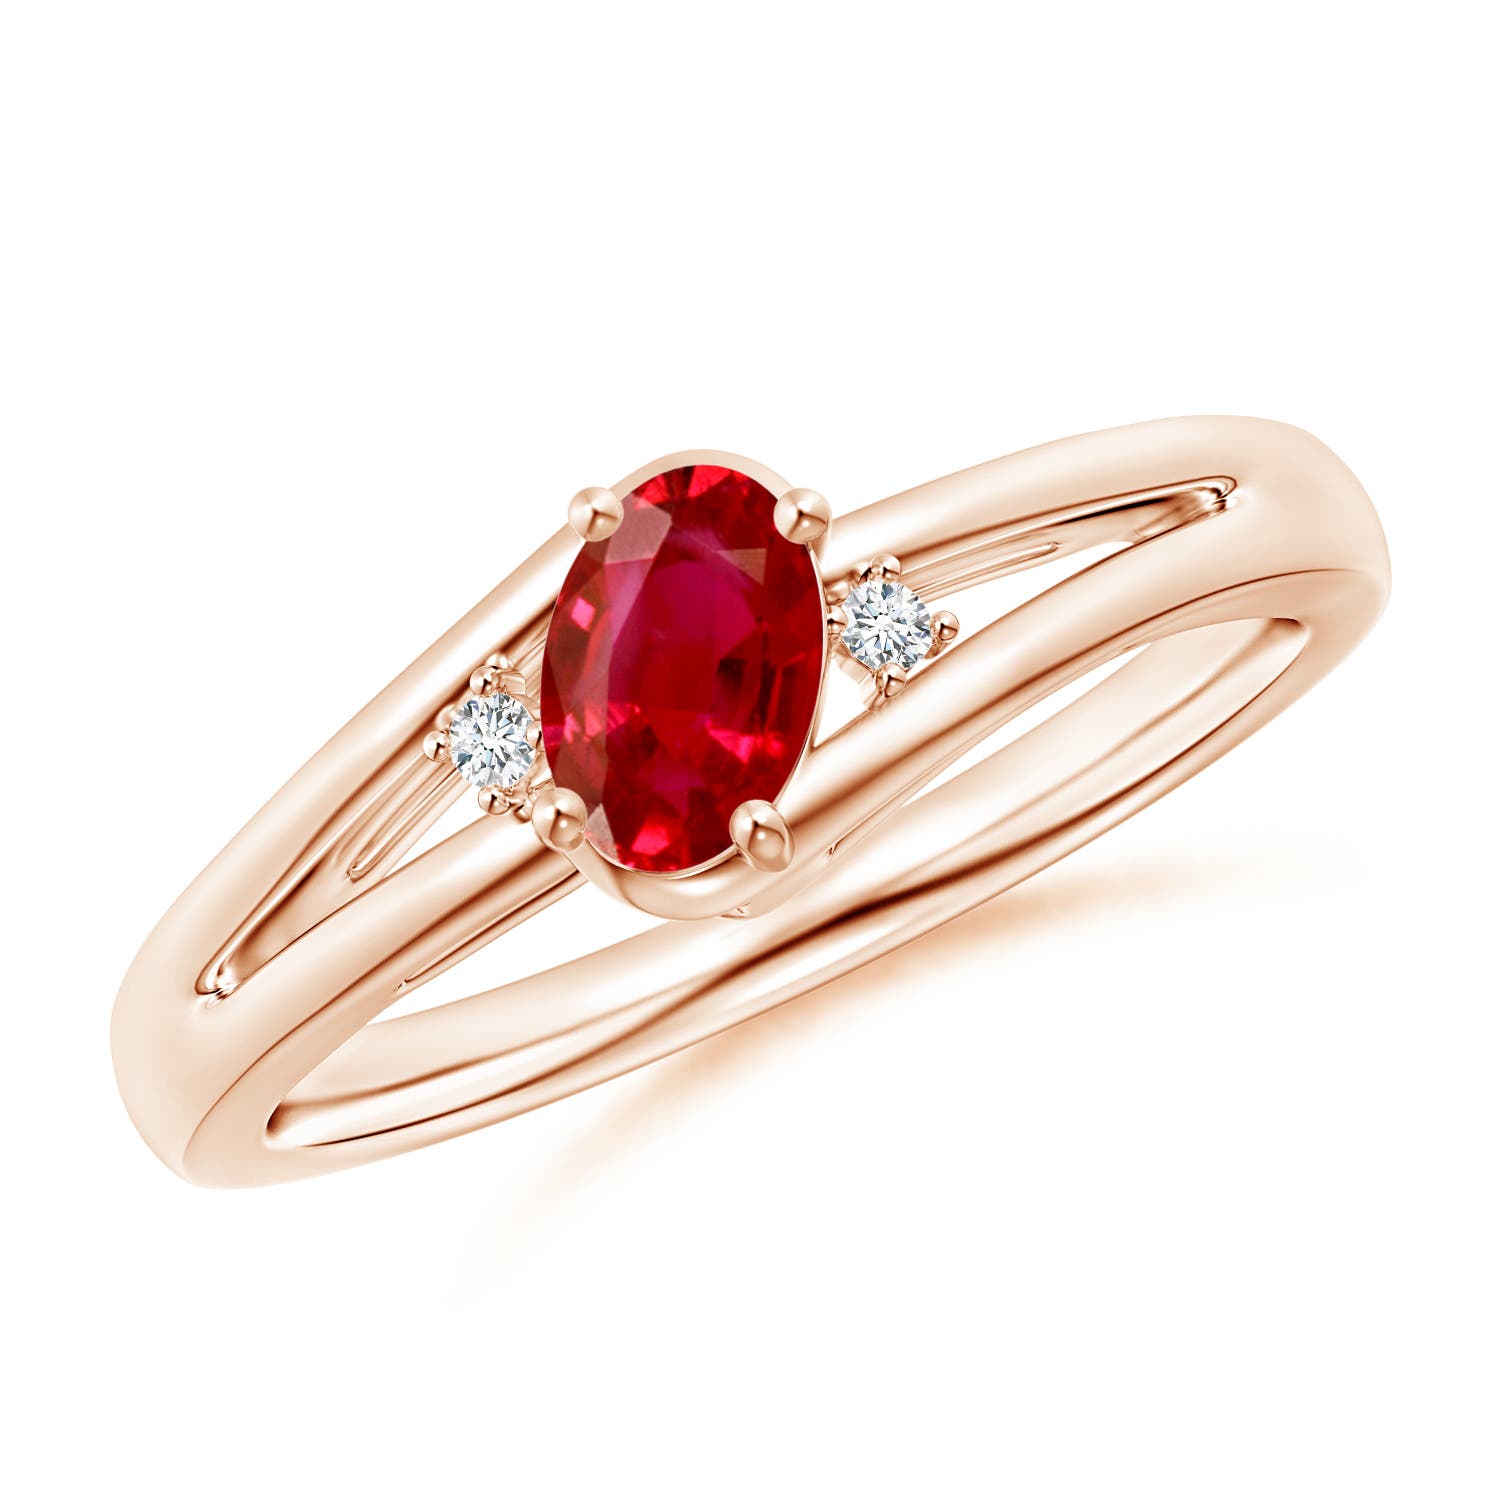 Pin by Manoj kadel on Rings | Ladies diamond rings, Gold jewelry fashion,  Beautiful jewelry